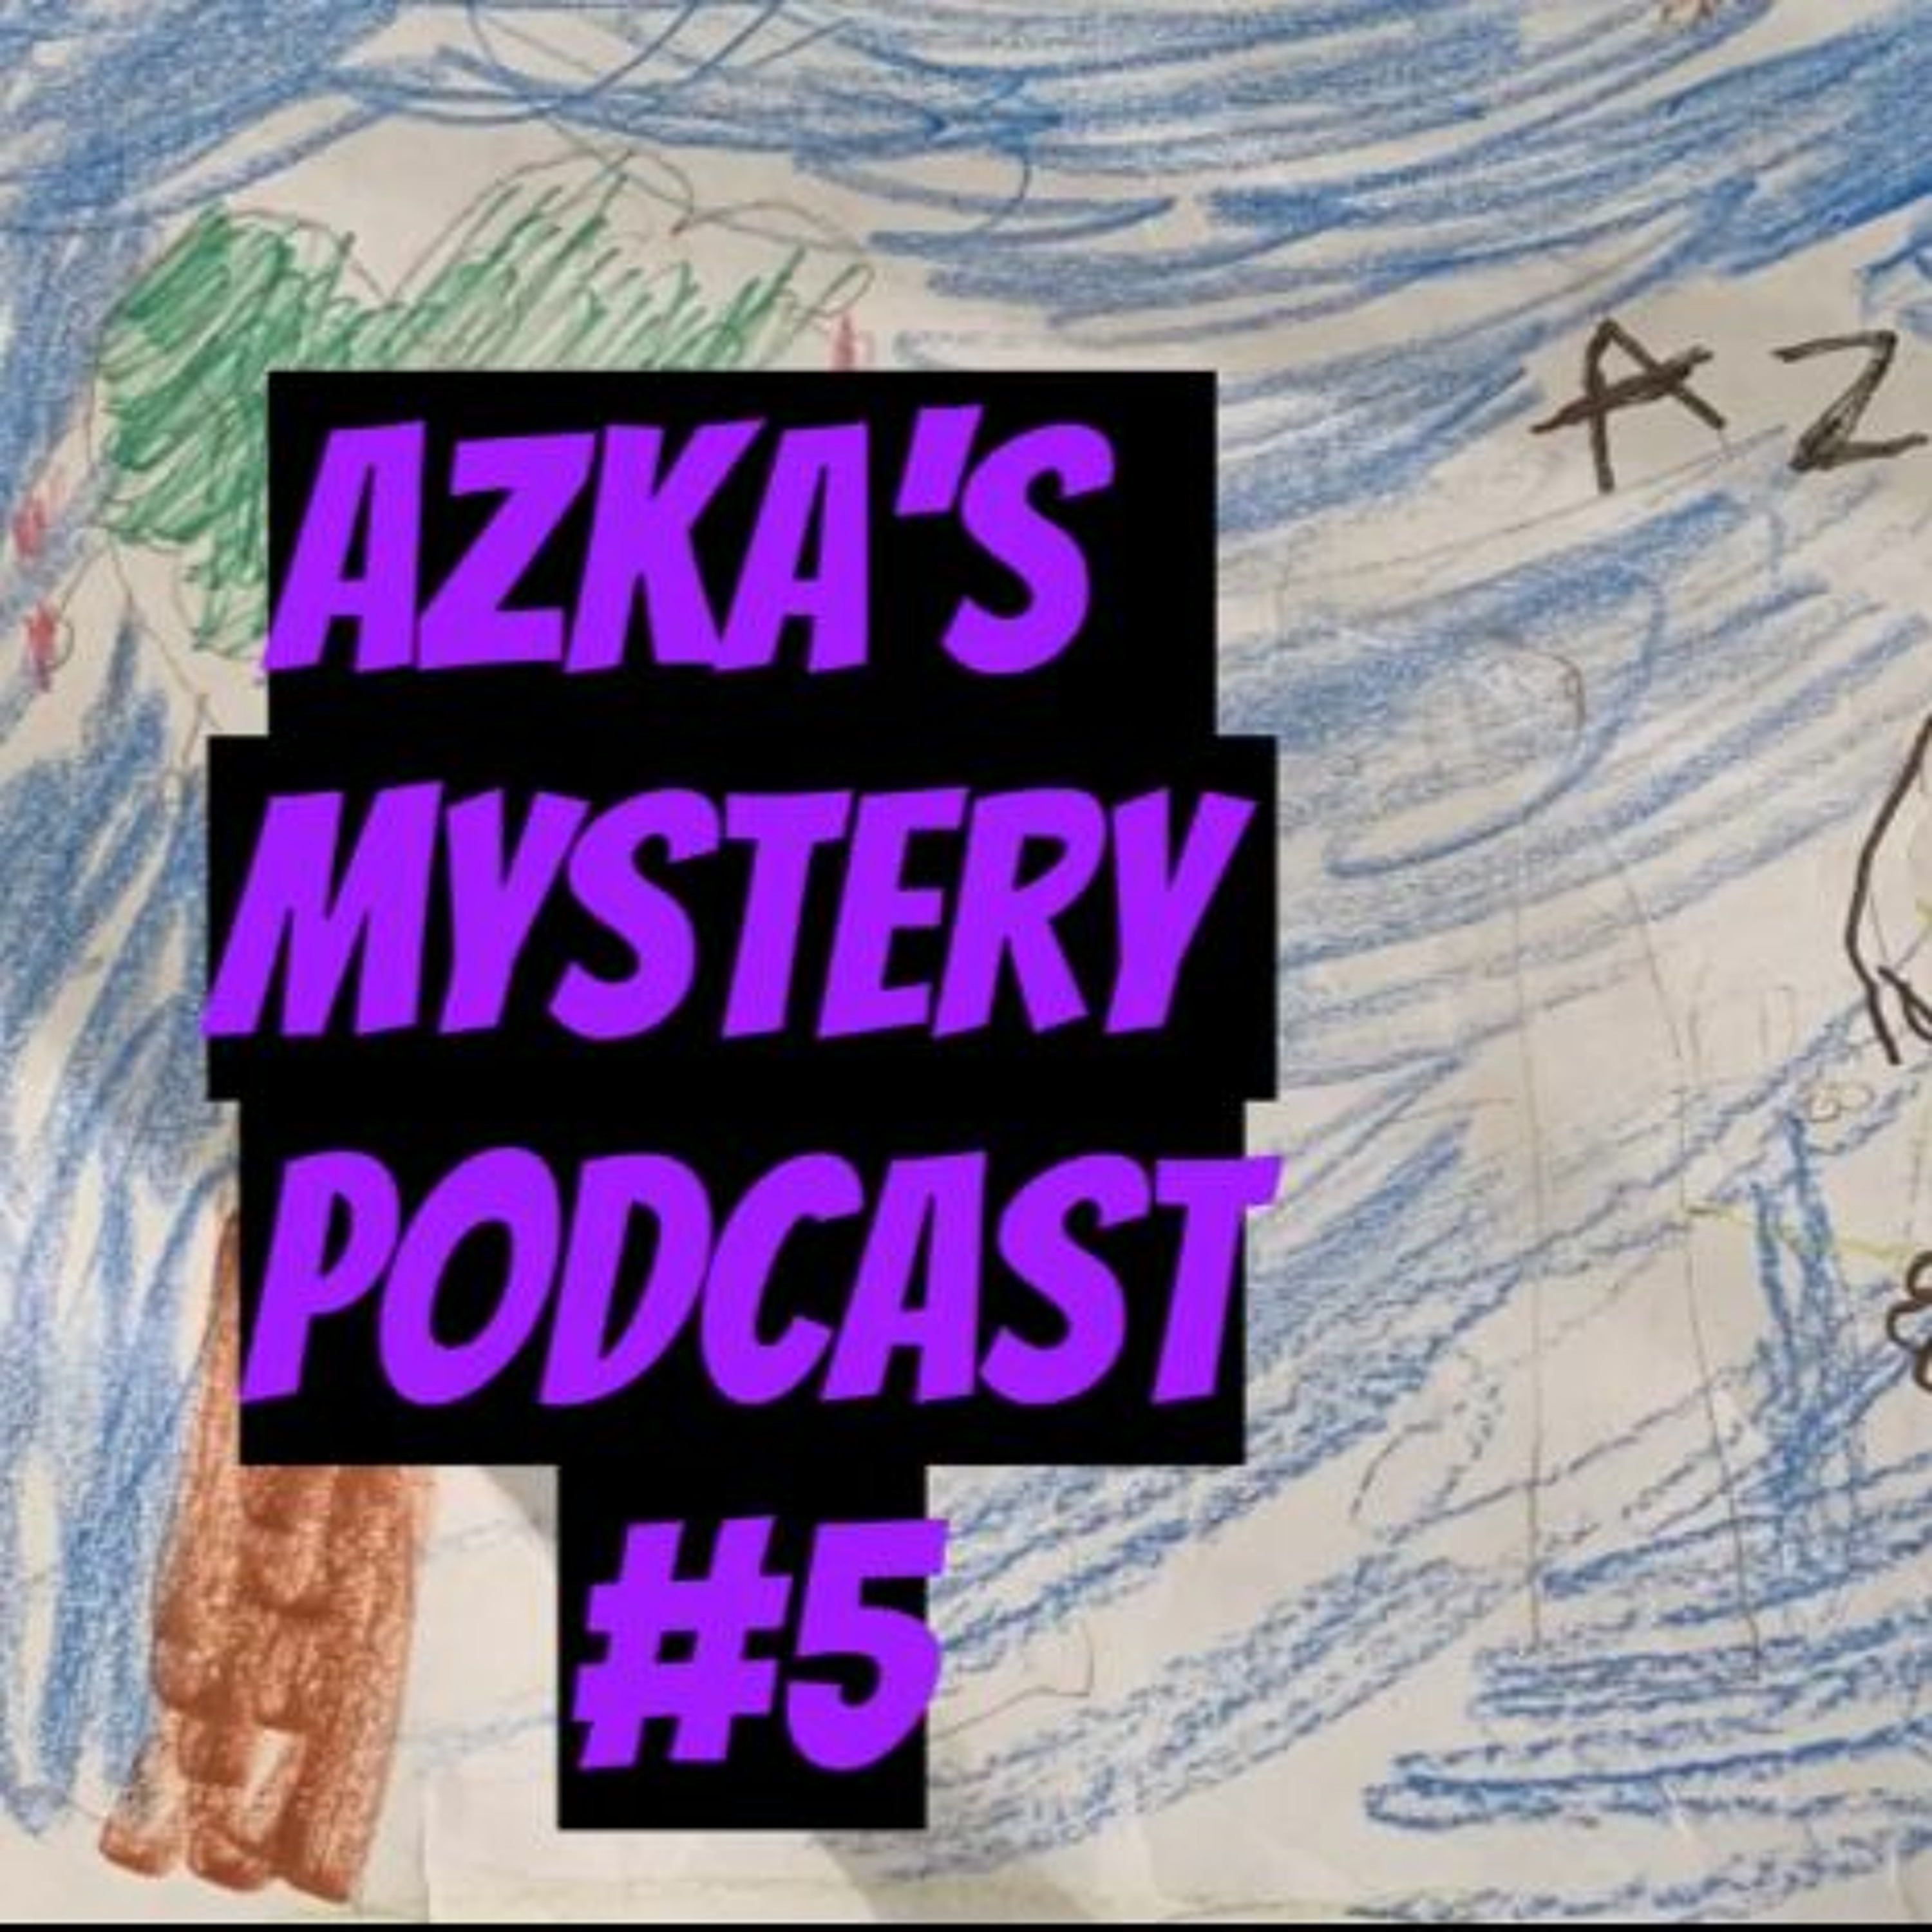 "Azka's Mystery Podcst" Podcast